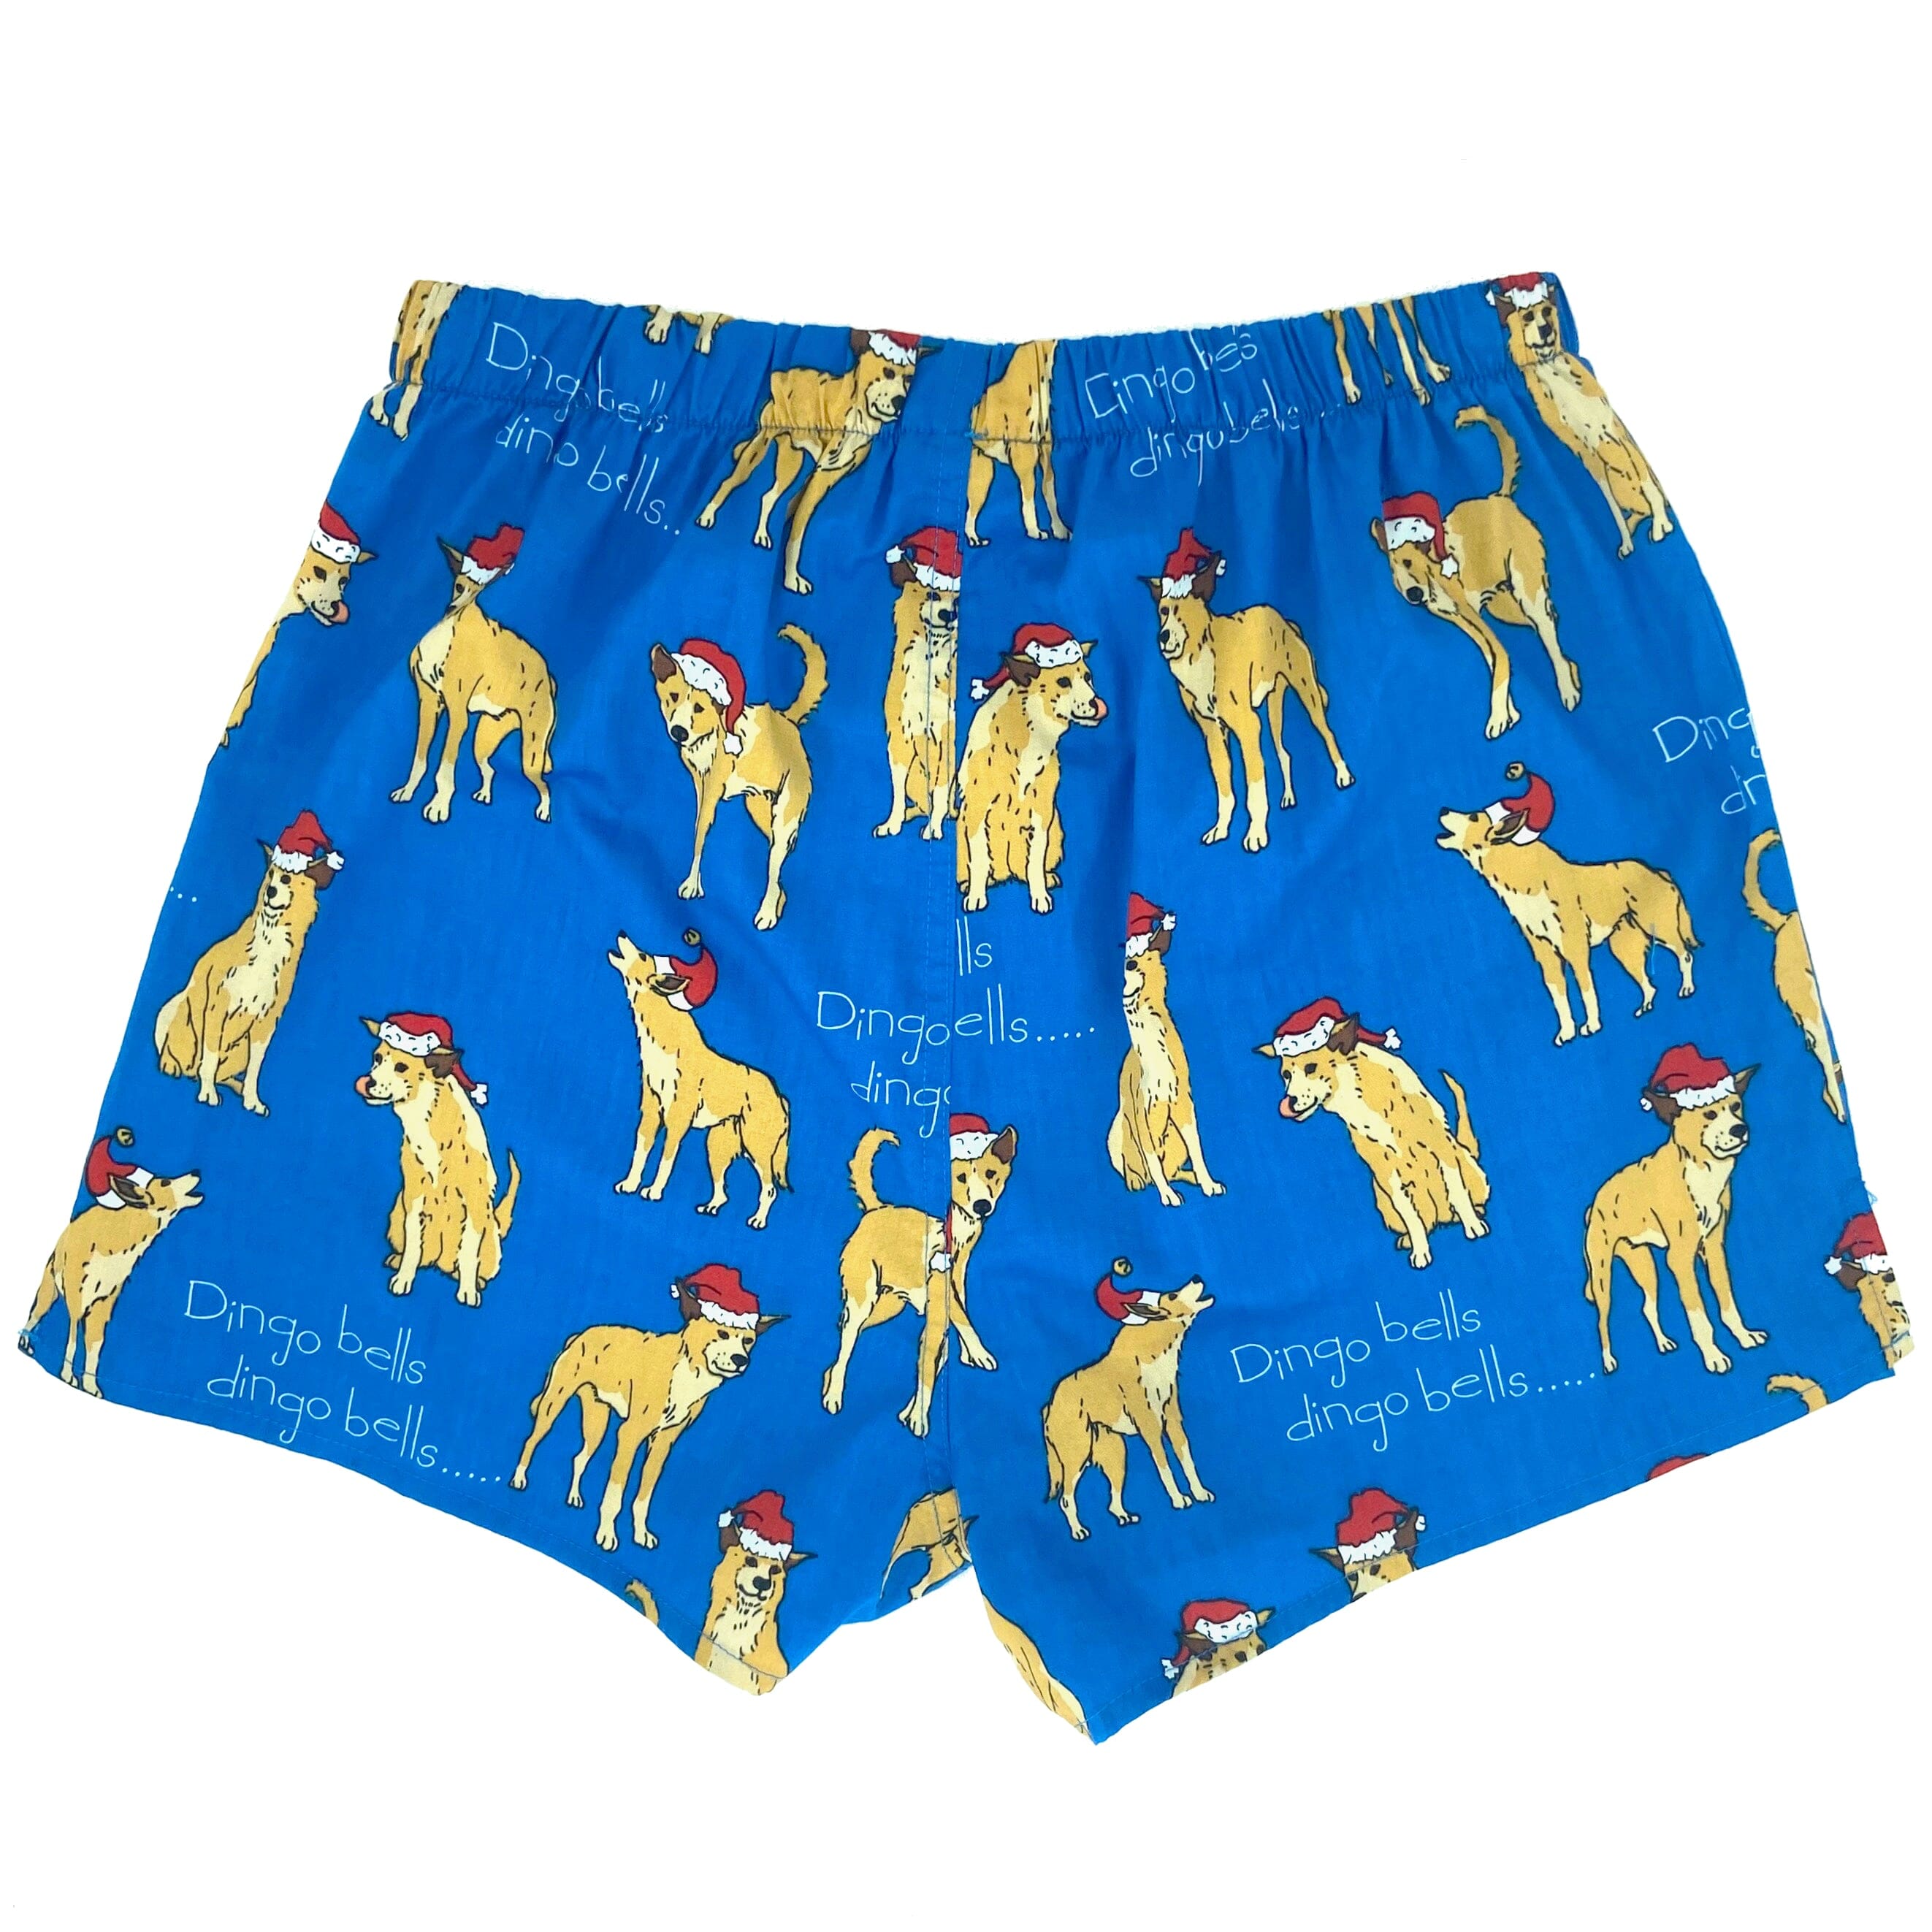 Men's Bright Blue Dingoes Wearing Santa Hats Dingo Bells Boxer Shorts